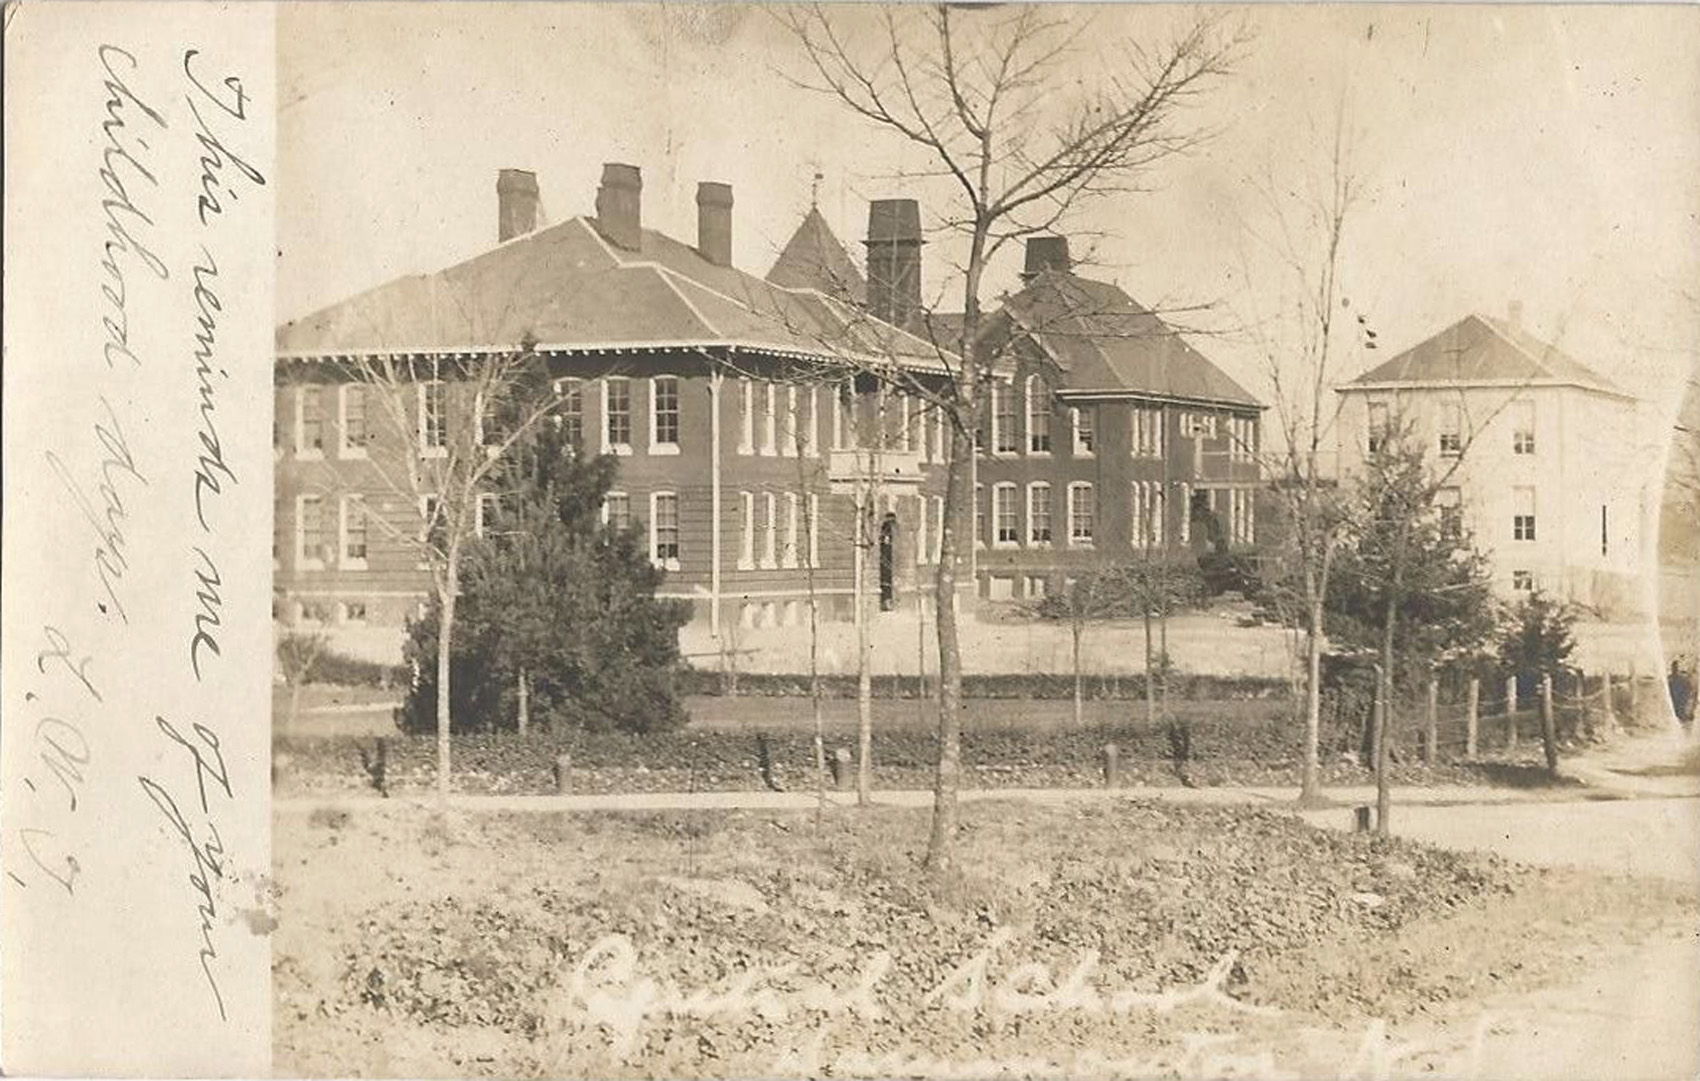 Hammonton - School building - 1907